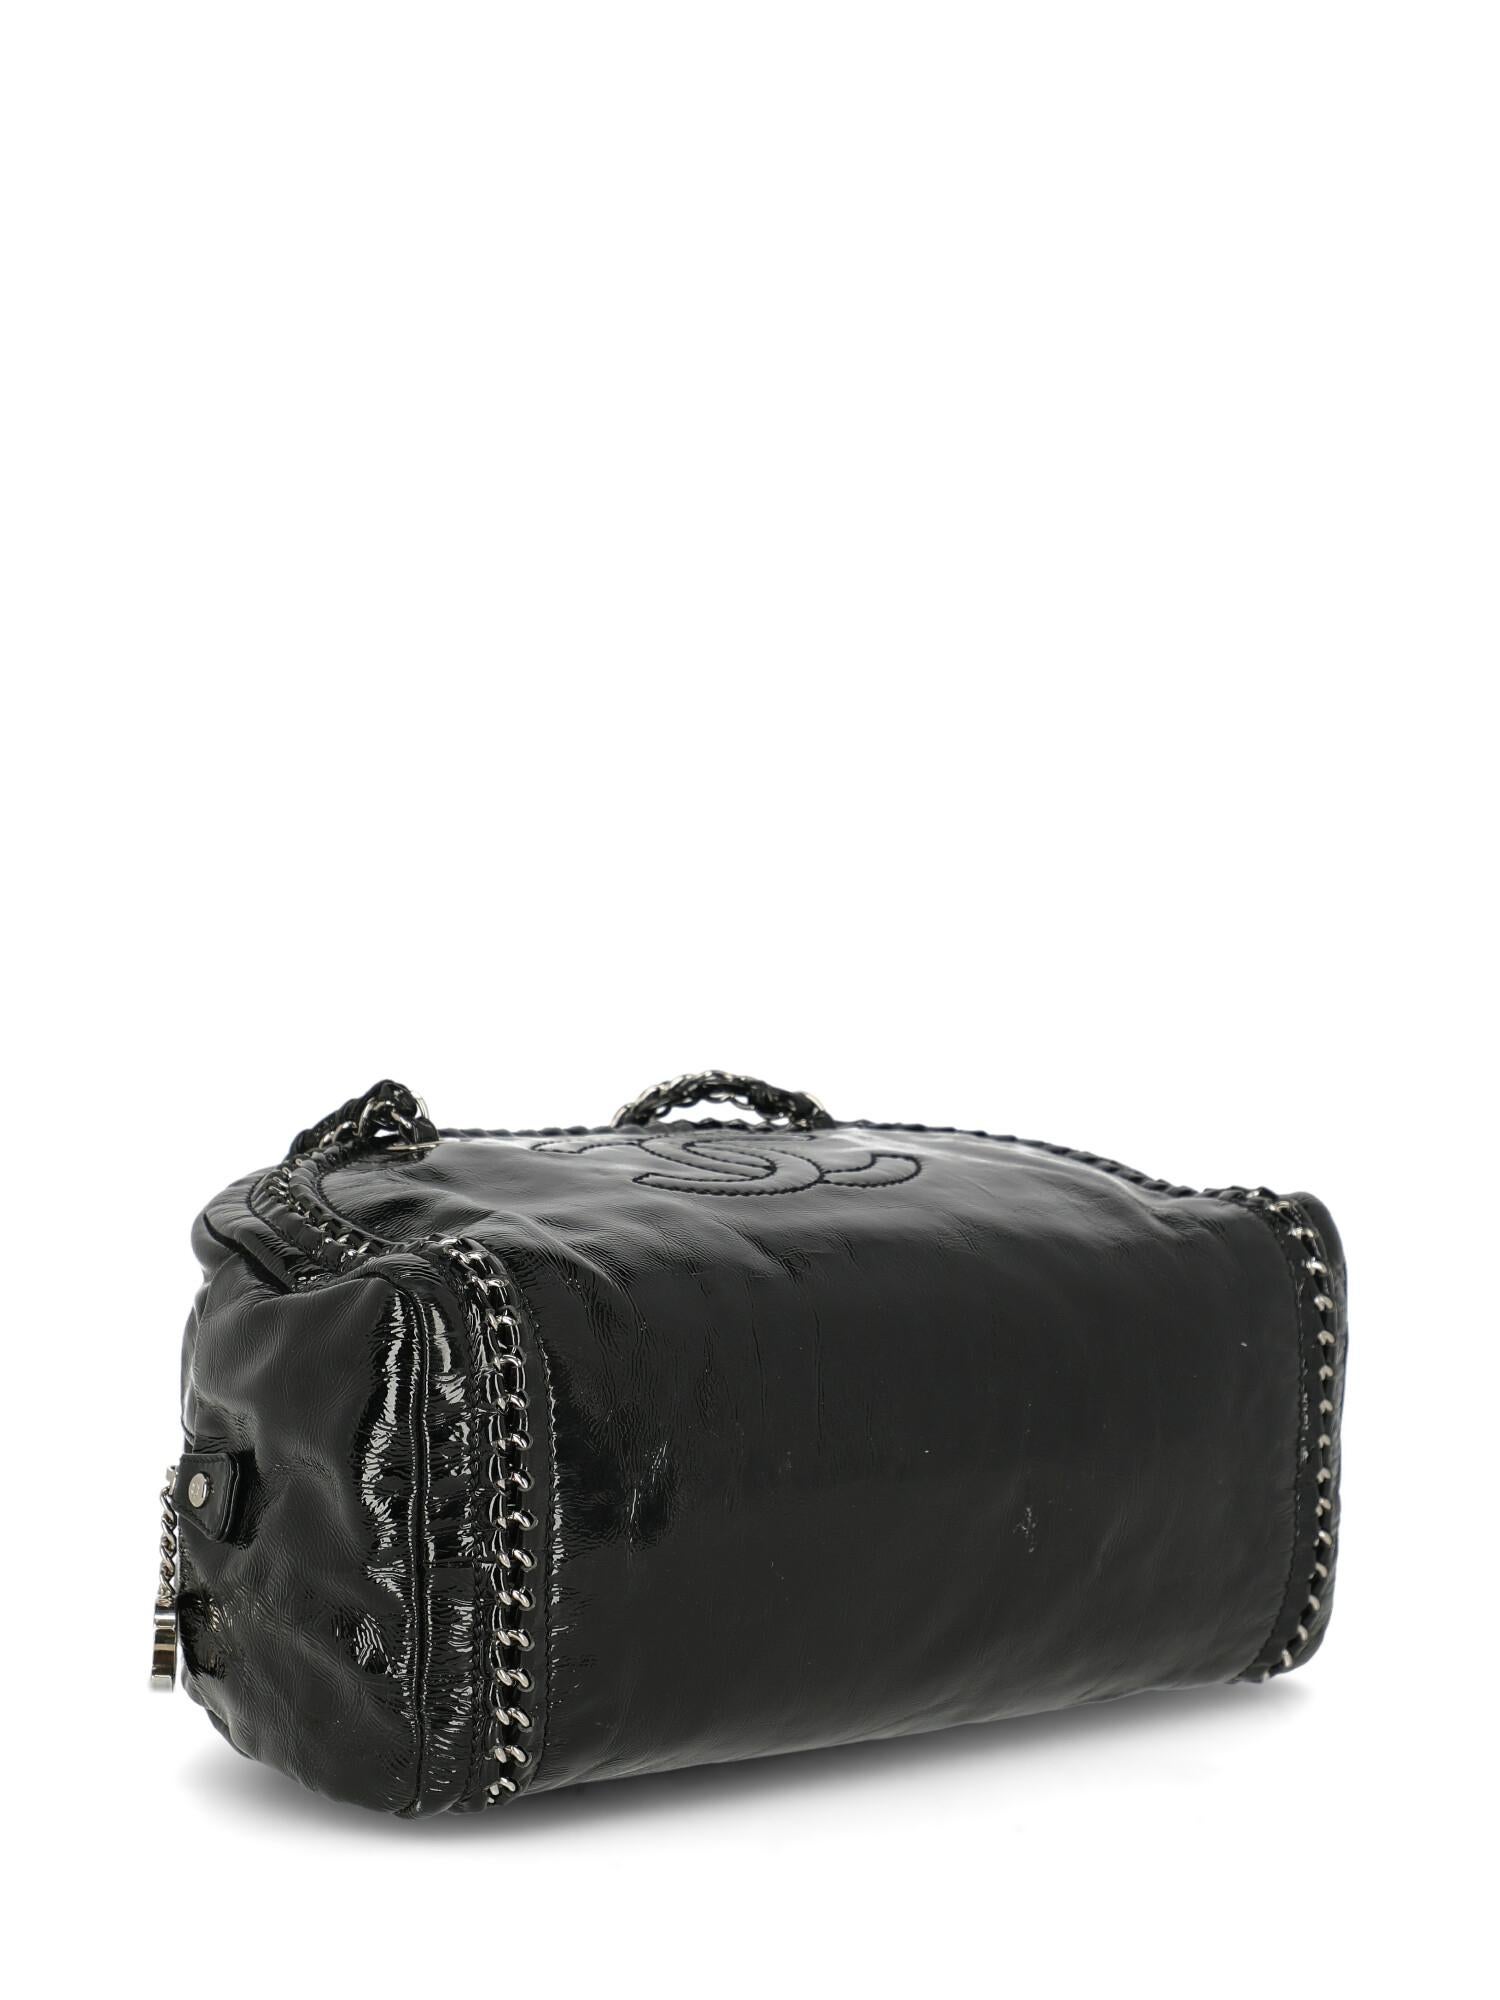 Chanel Woman Handbag Black Leather For Sale 1